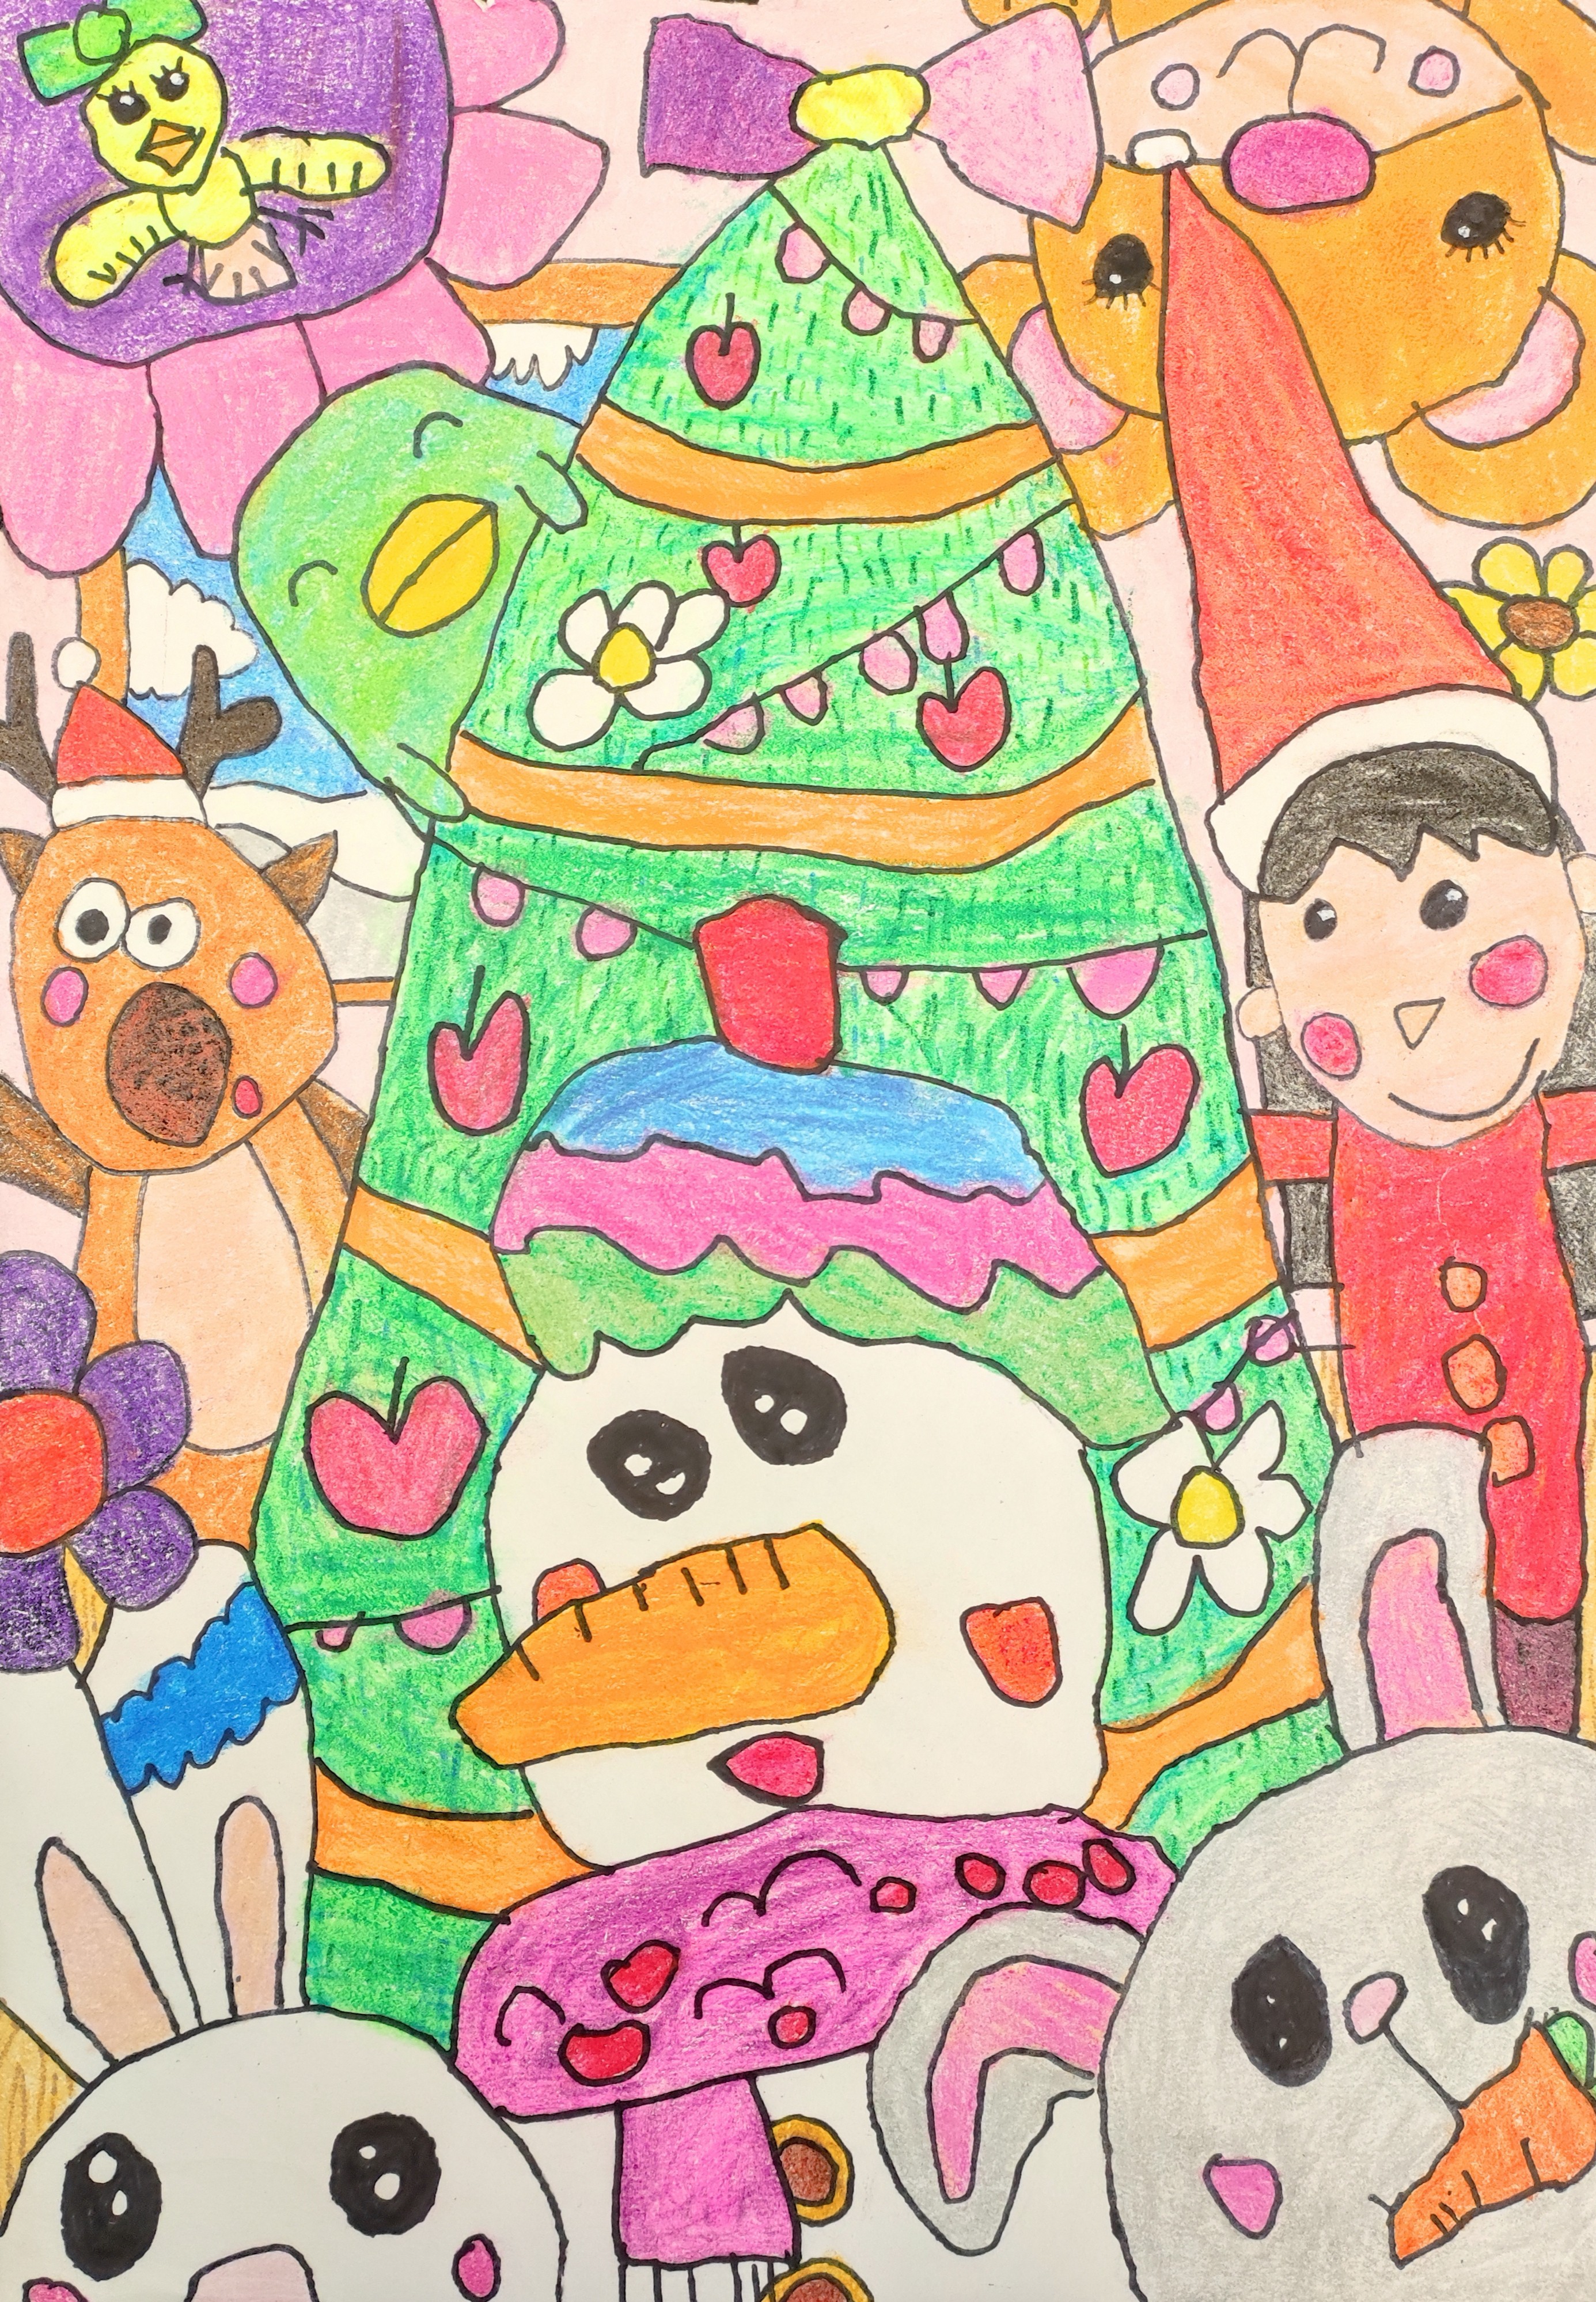 <div>繽紛聖誕-幼稚園高級組(K3)-冠軍-彭柏雅<br />充滿著快樂的聖誕氣氛！</div>
<div>畫面構圖、角色、色彩多元，透視處理亦相對複雜，作品水準非常優秀。</div>